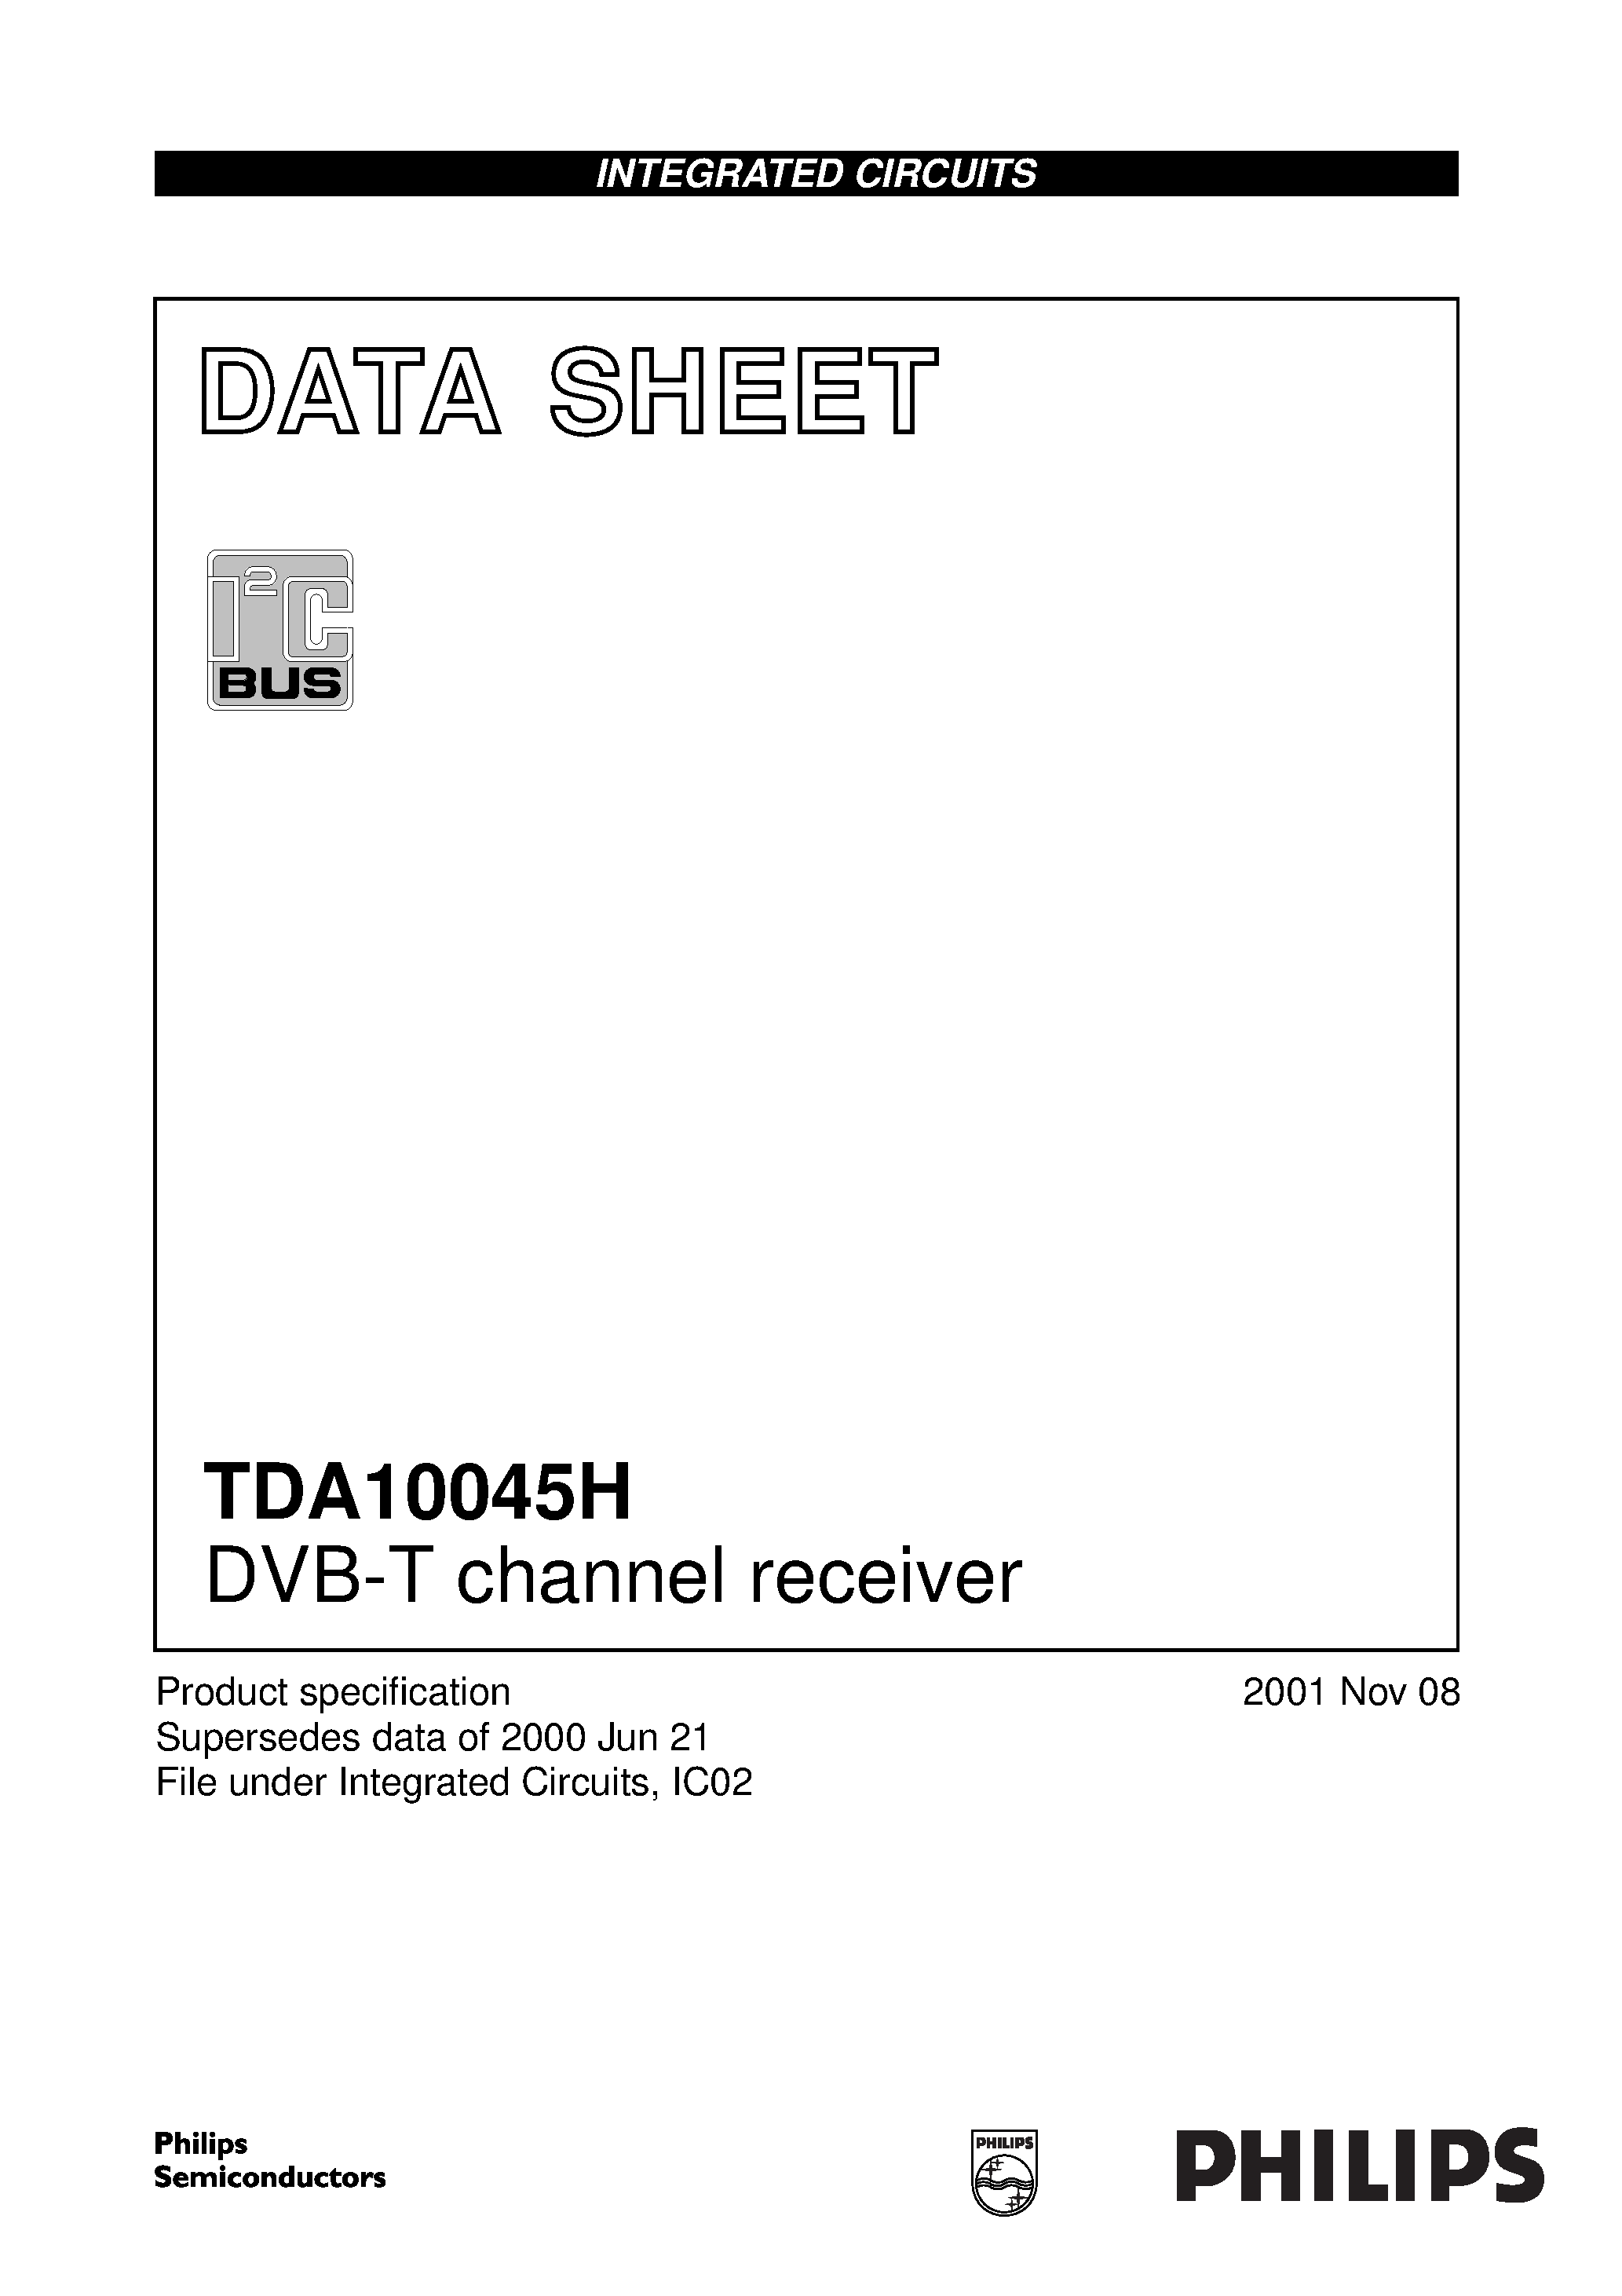 Даташит TDA10045 - DVB-T channel receiver страница 1